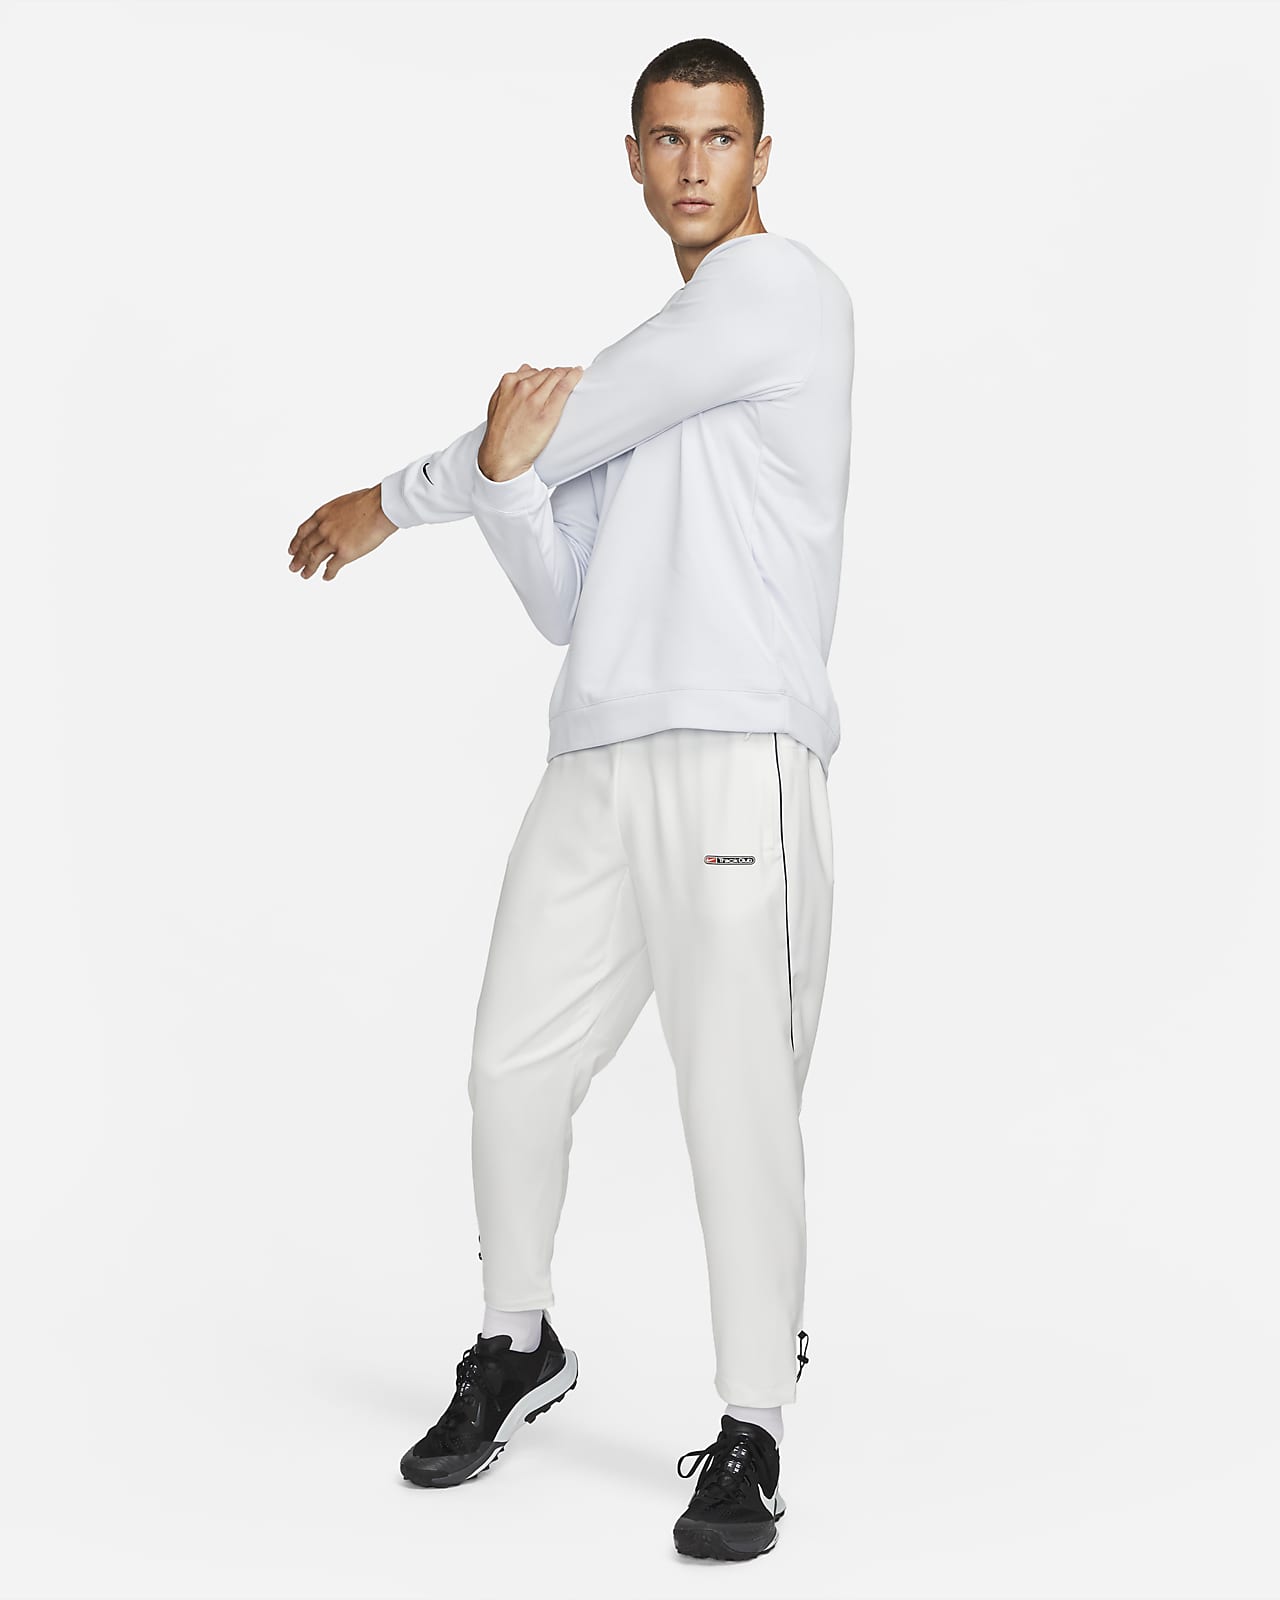 Nike Dri-Fit Track Pants, Gray Orange Stripe SIZE: YOUTH (8-10) | eBay